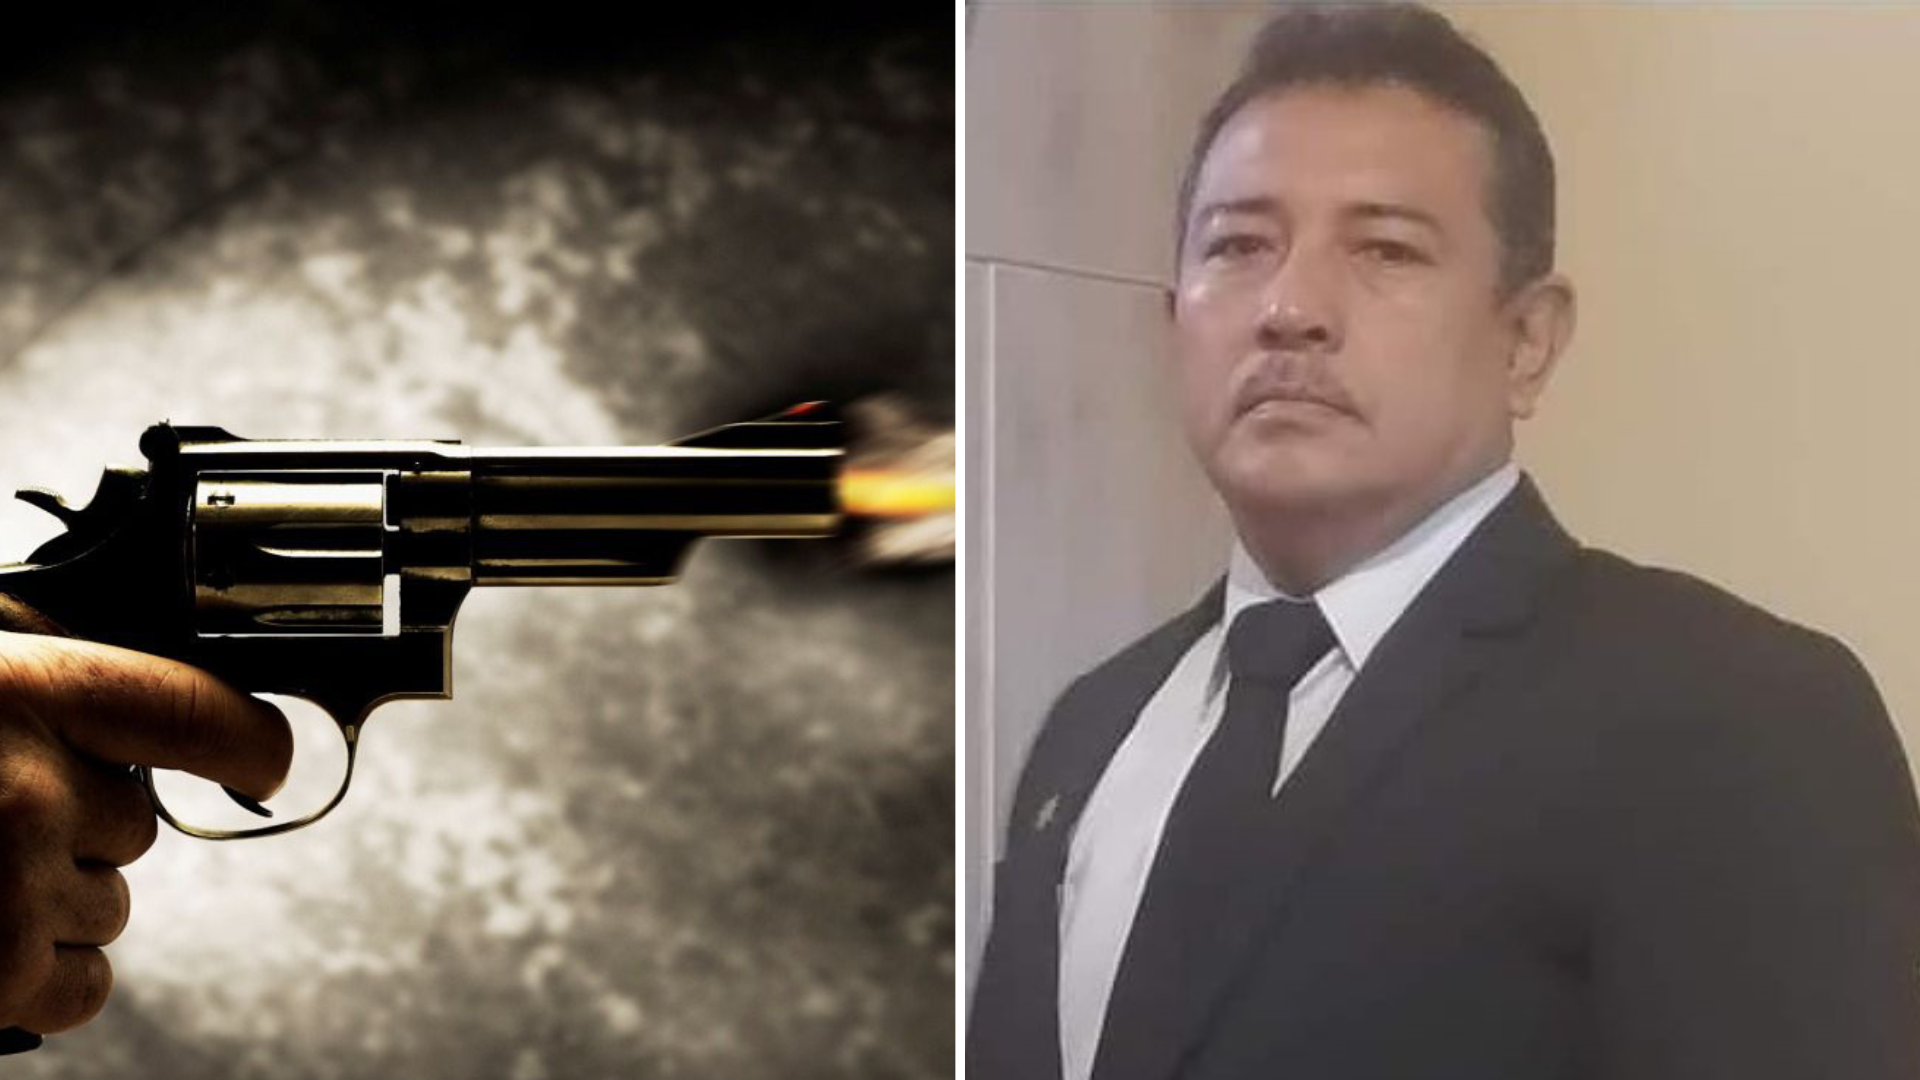 abogado es asesinado a balazos en su oficina en arequipa: homicida fingió ser cliente